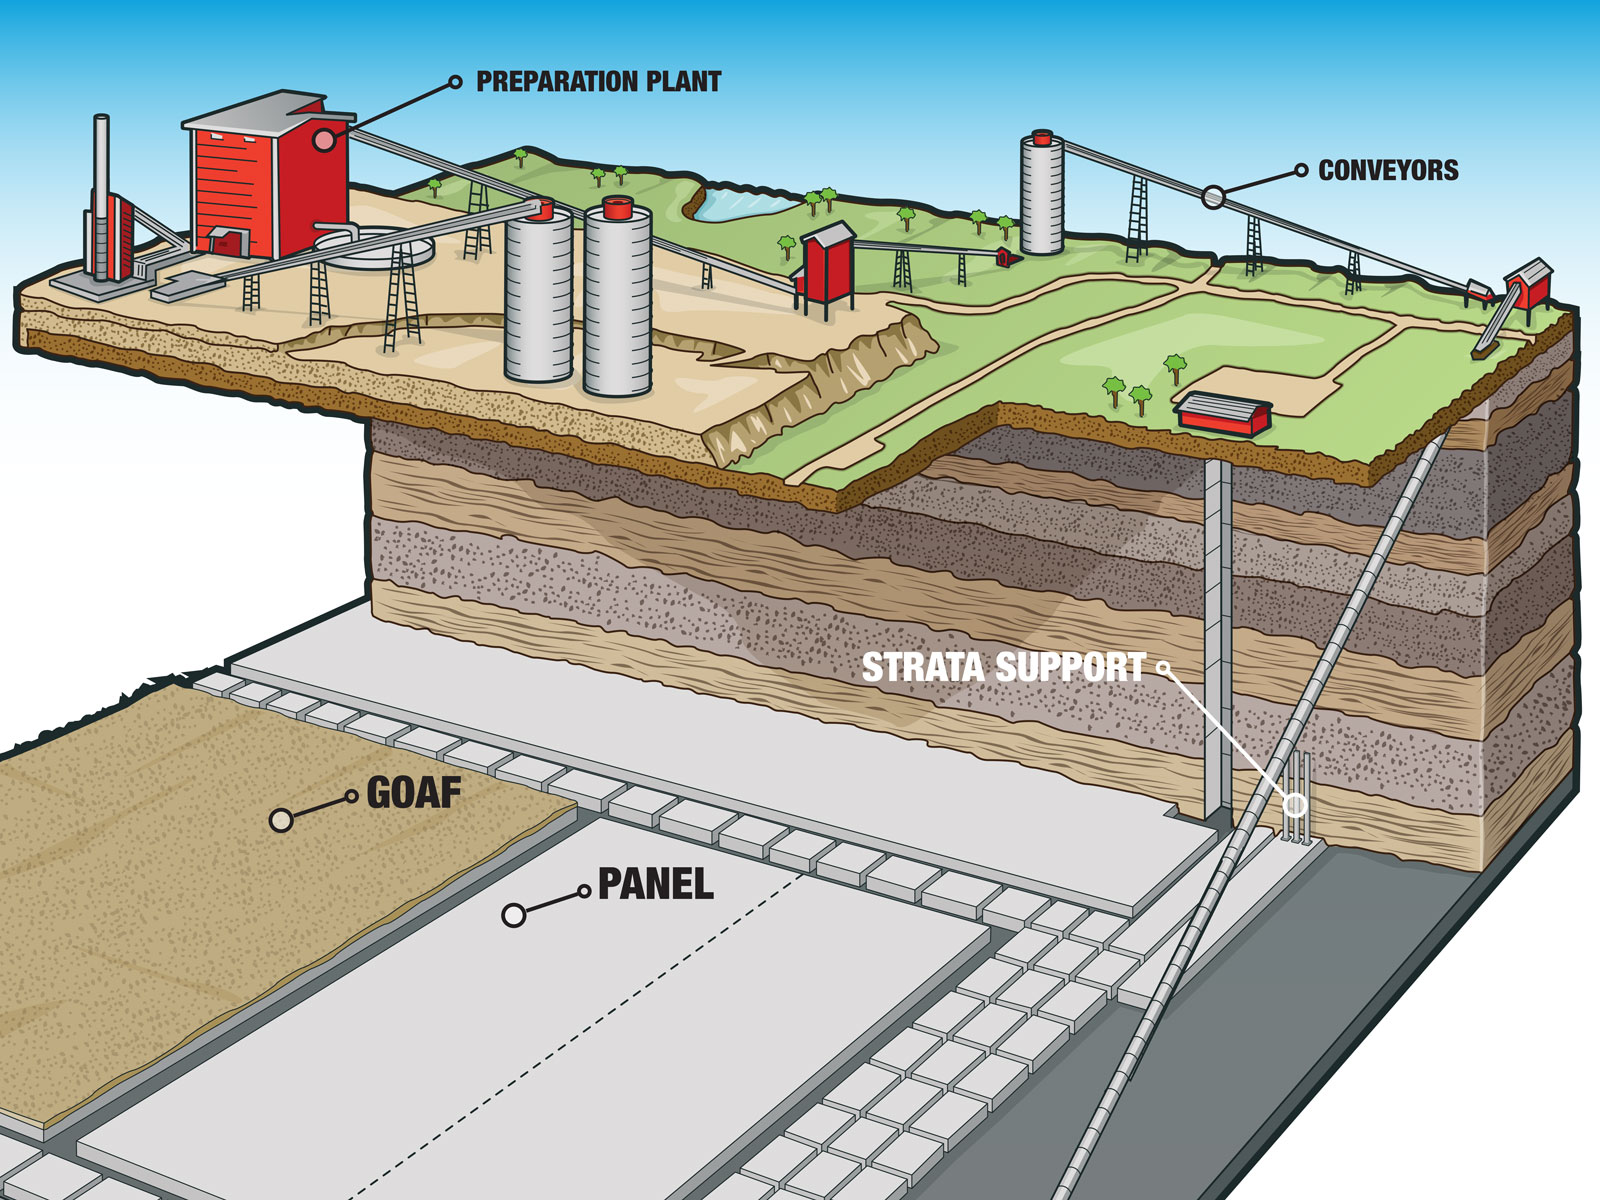 Mining Underground Cross-Section Illustration showing panels and shaft